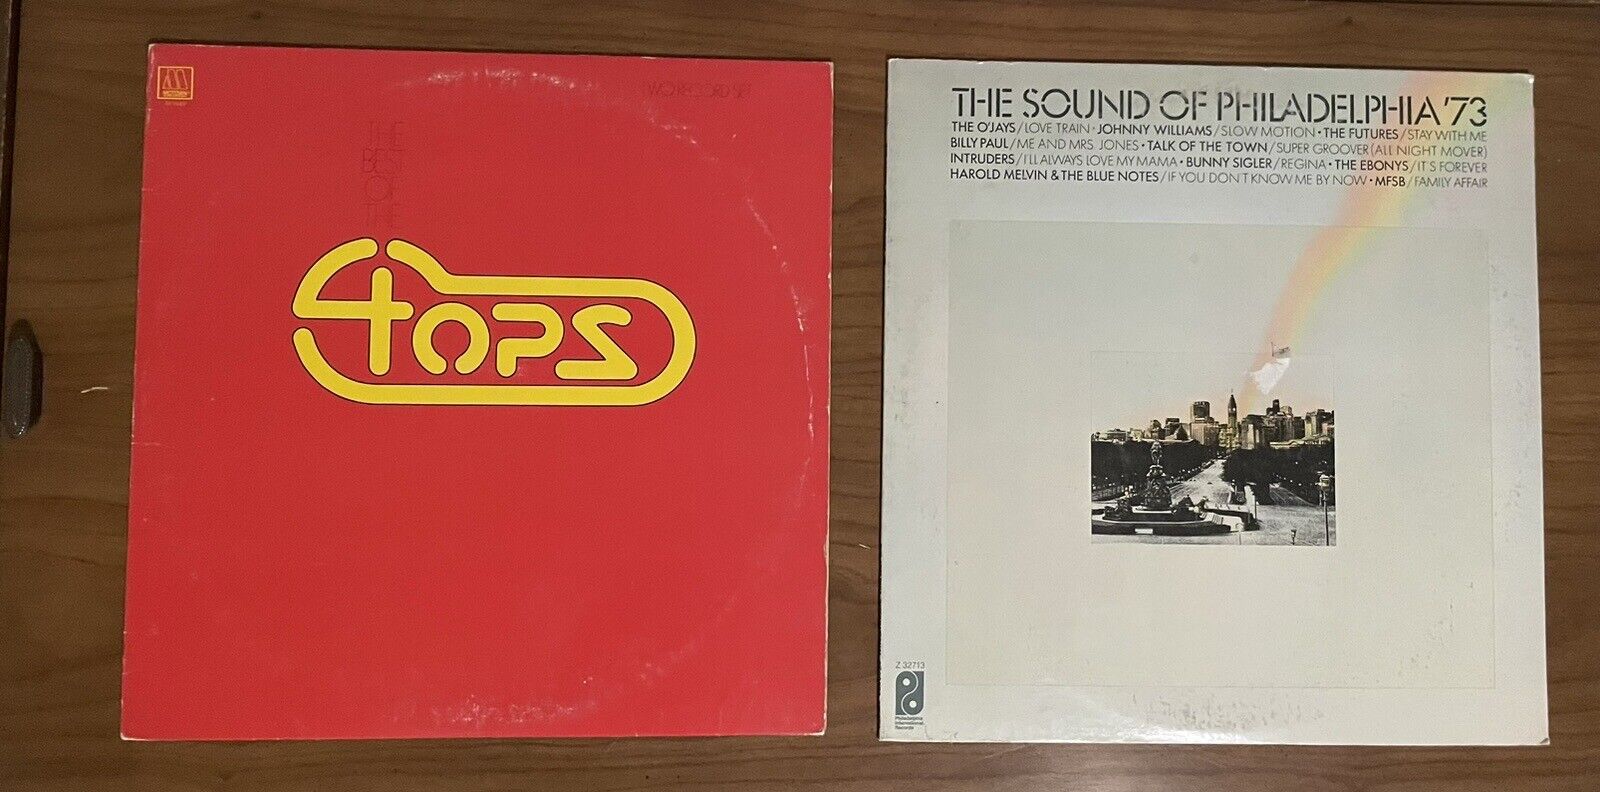 The Sound Of Philadelphia ‘73 Vintage Soul Album Plus Bonus Four Tops Record